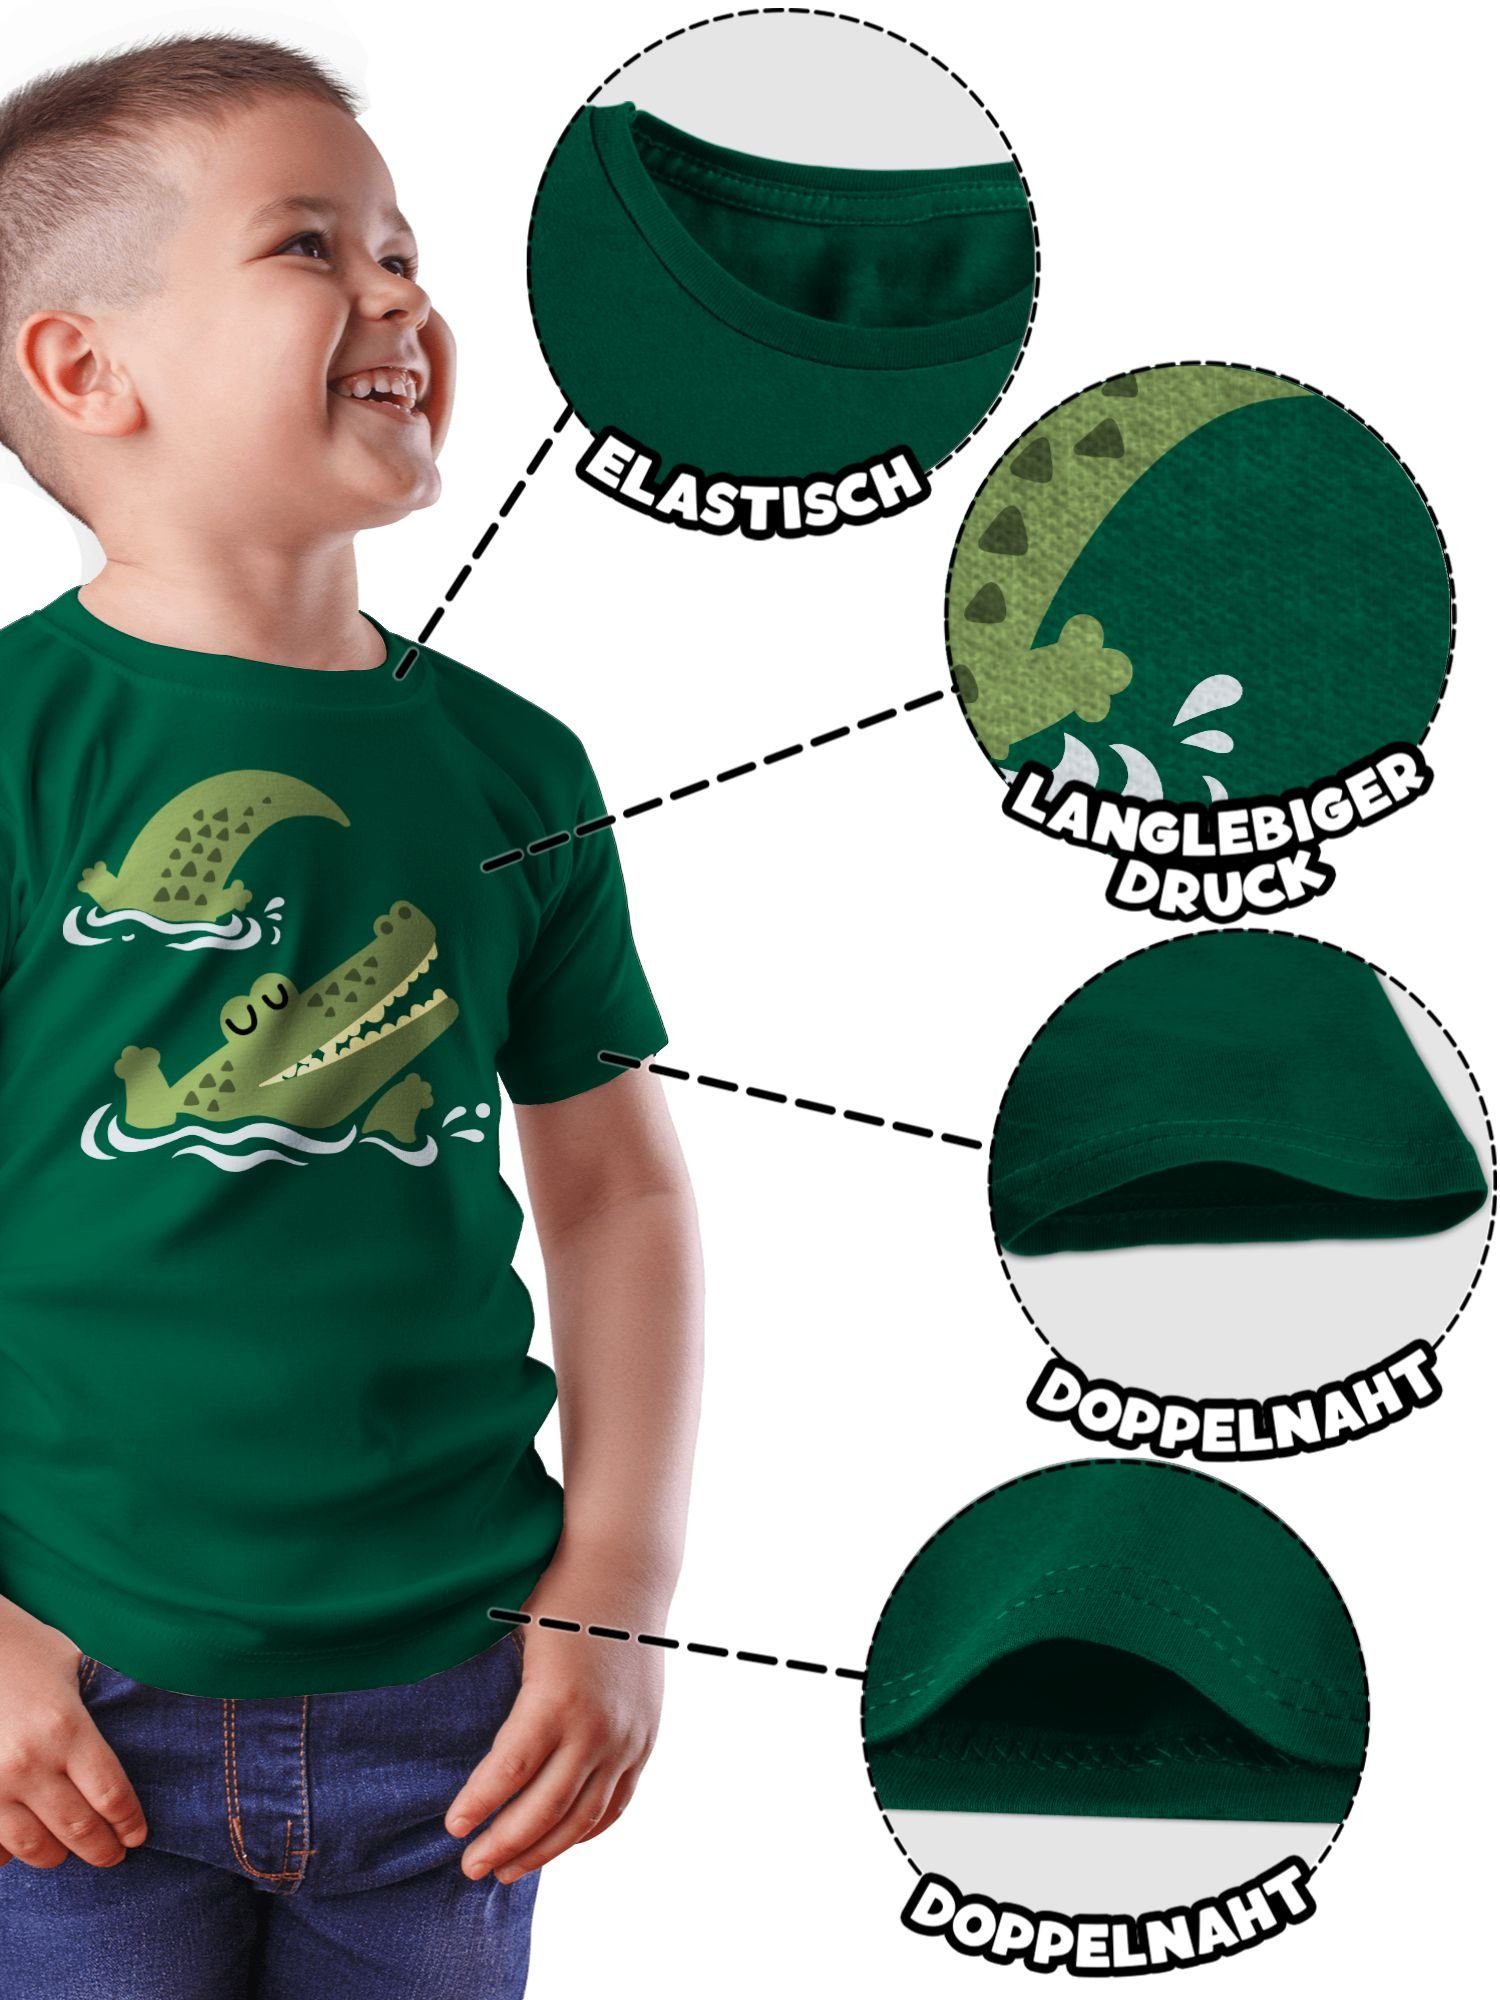 Shirtracer T-Shirt Glückliches Krokodil Tiermotiv Animal 1 Print Tannengrün